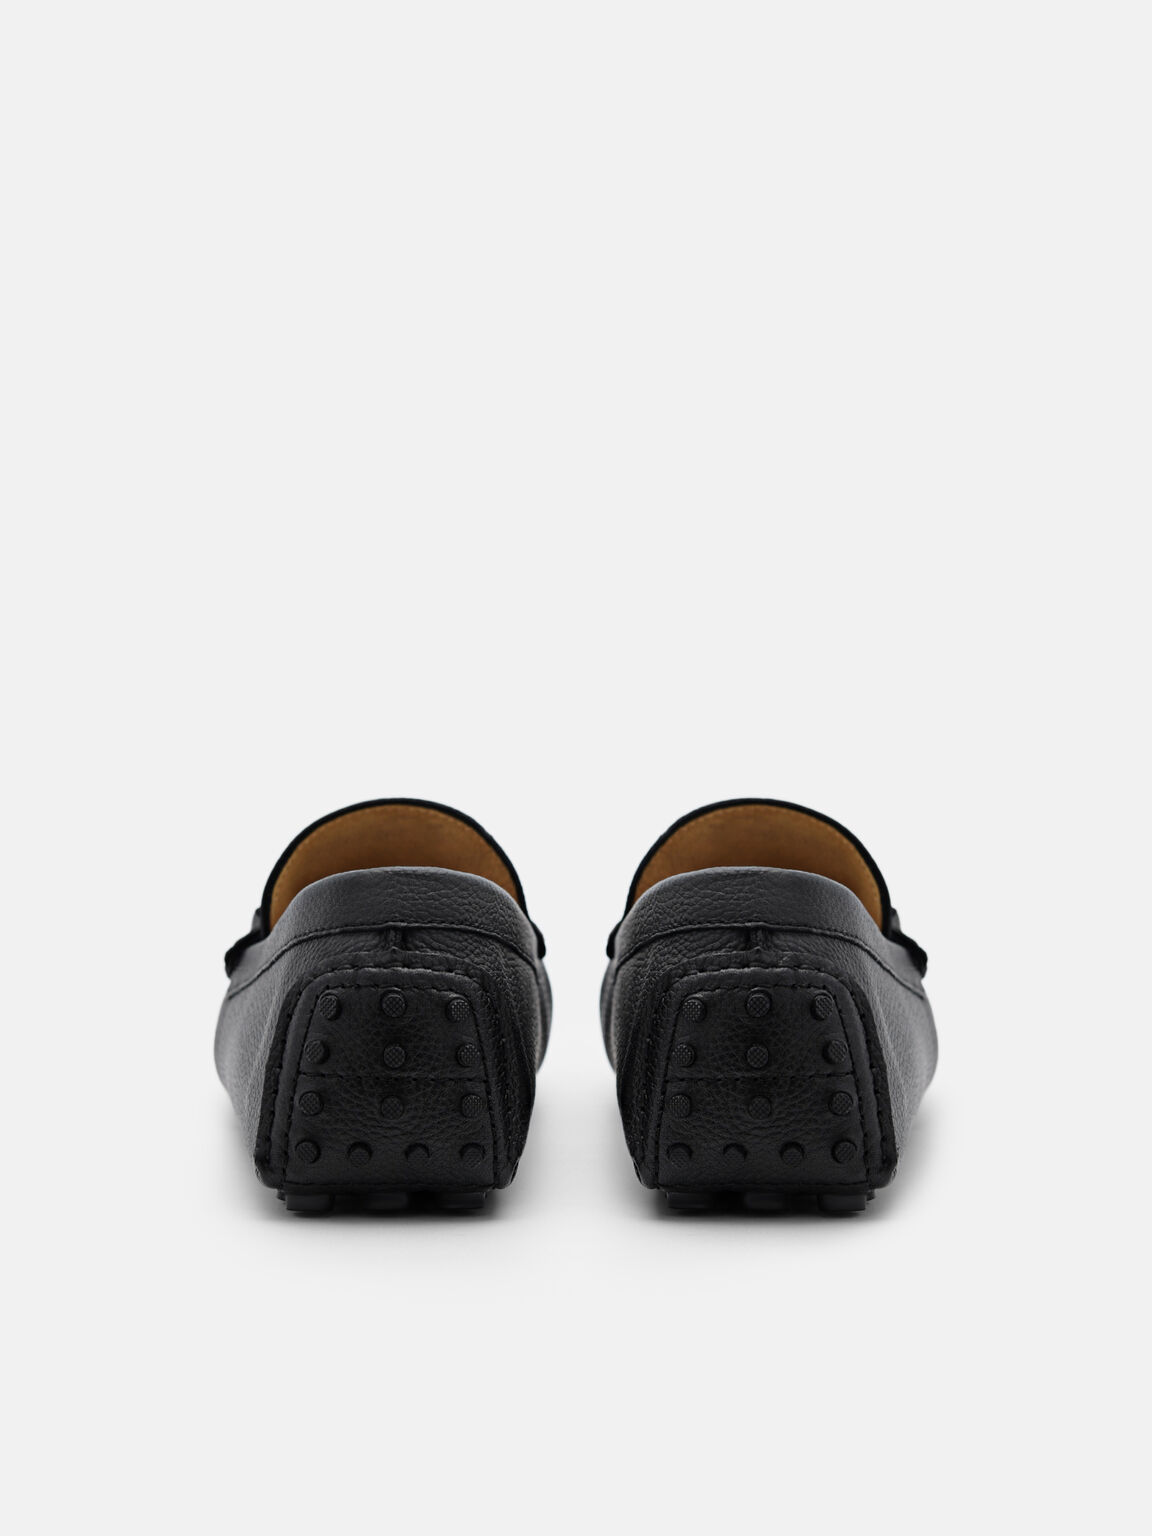 Jackson Leather Driving Shoes, Black, hi-res